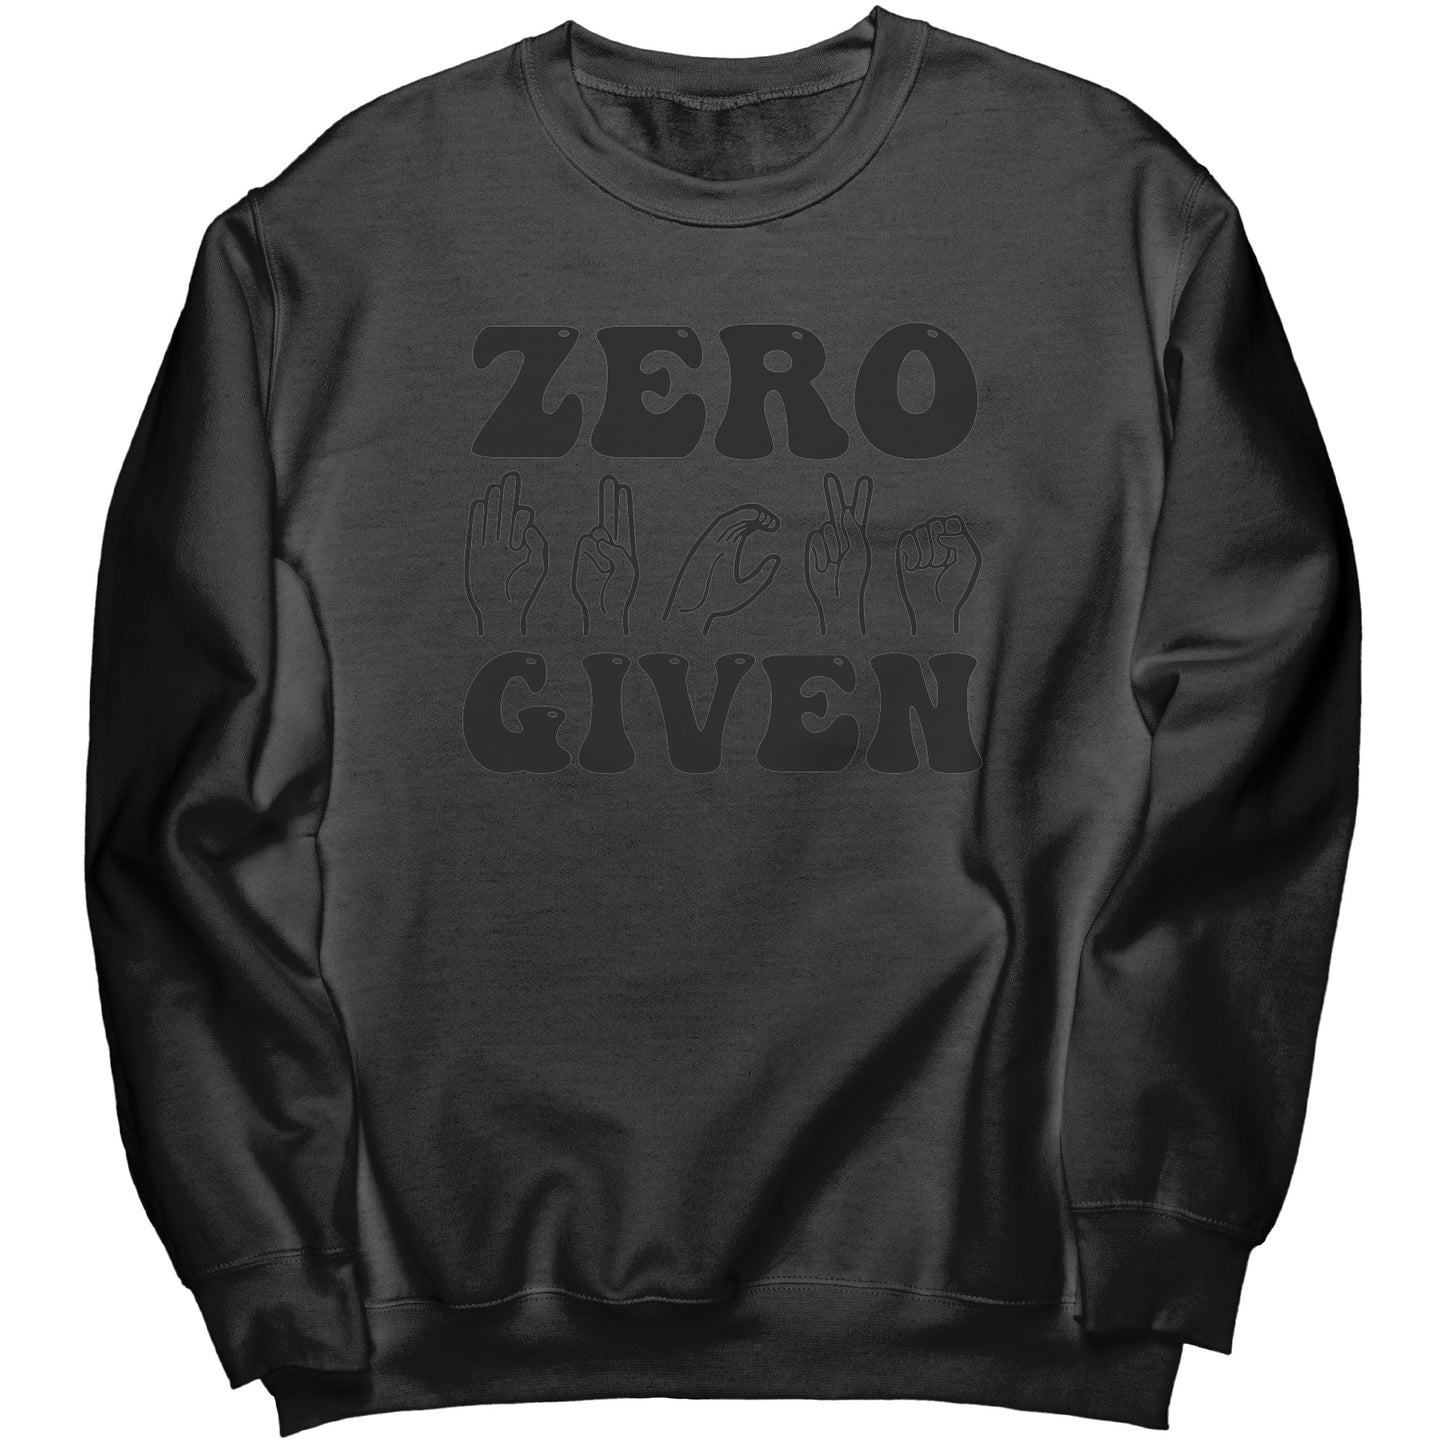 Zero Crew Sweatshirt